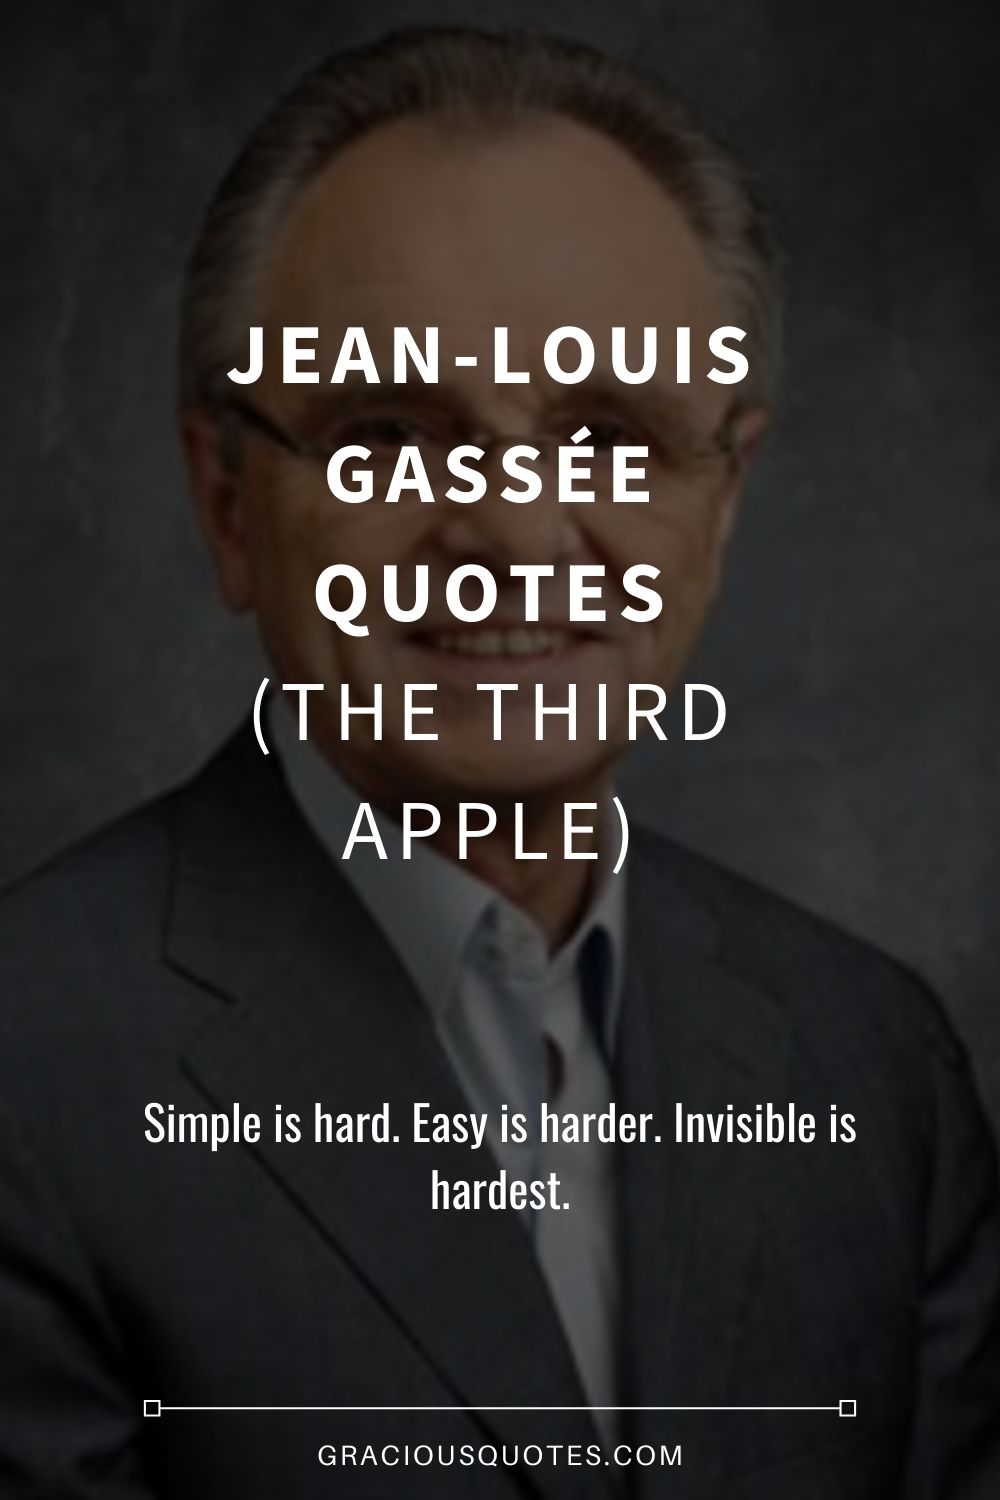 Jean-Louis Gassée Quotes (THE THIRD APPLE) - Gracious Quotes